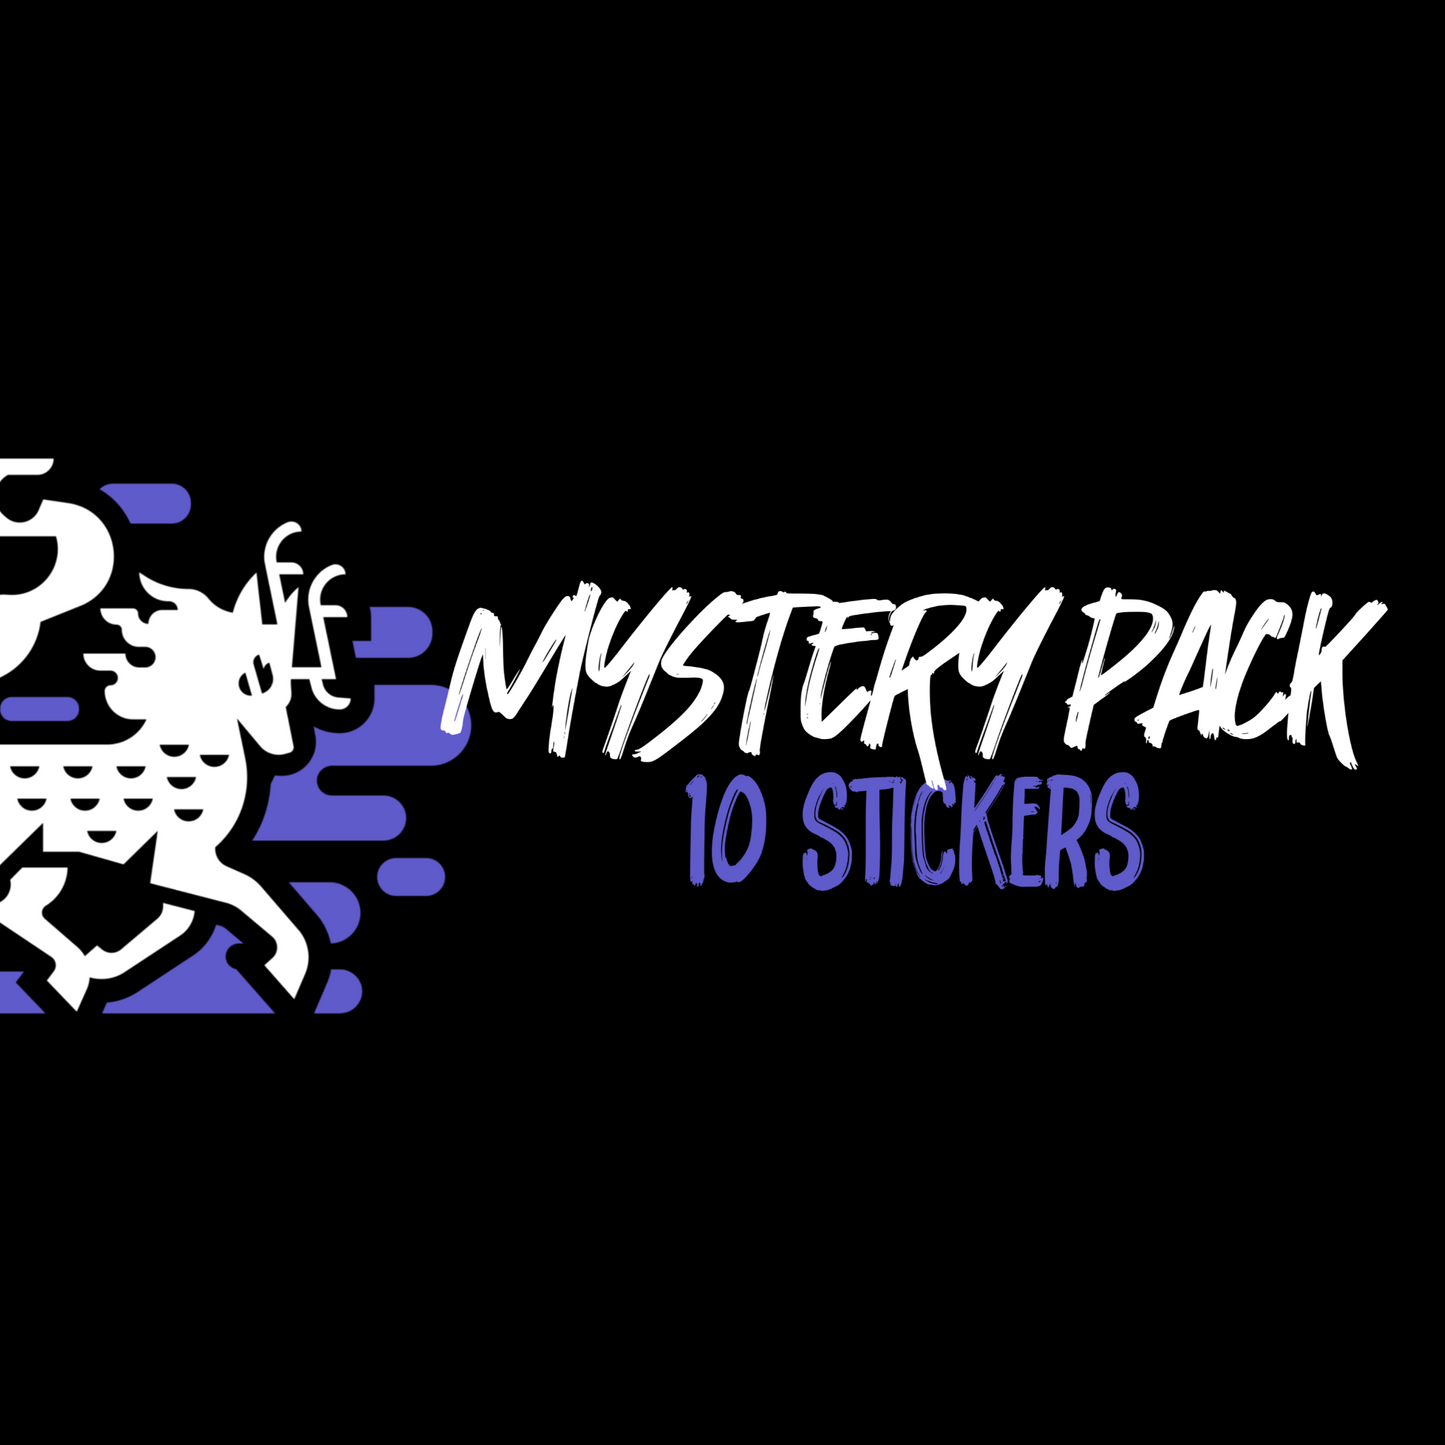 Mystery sticker pack!